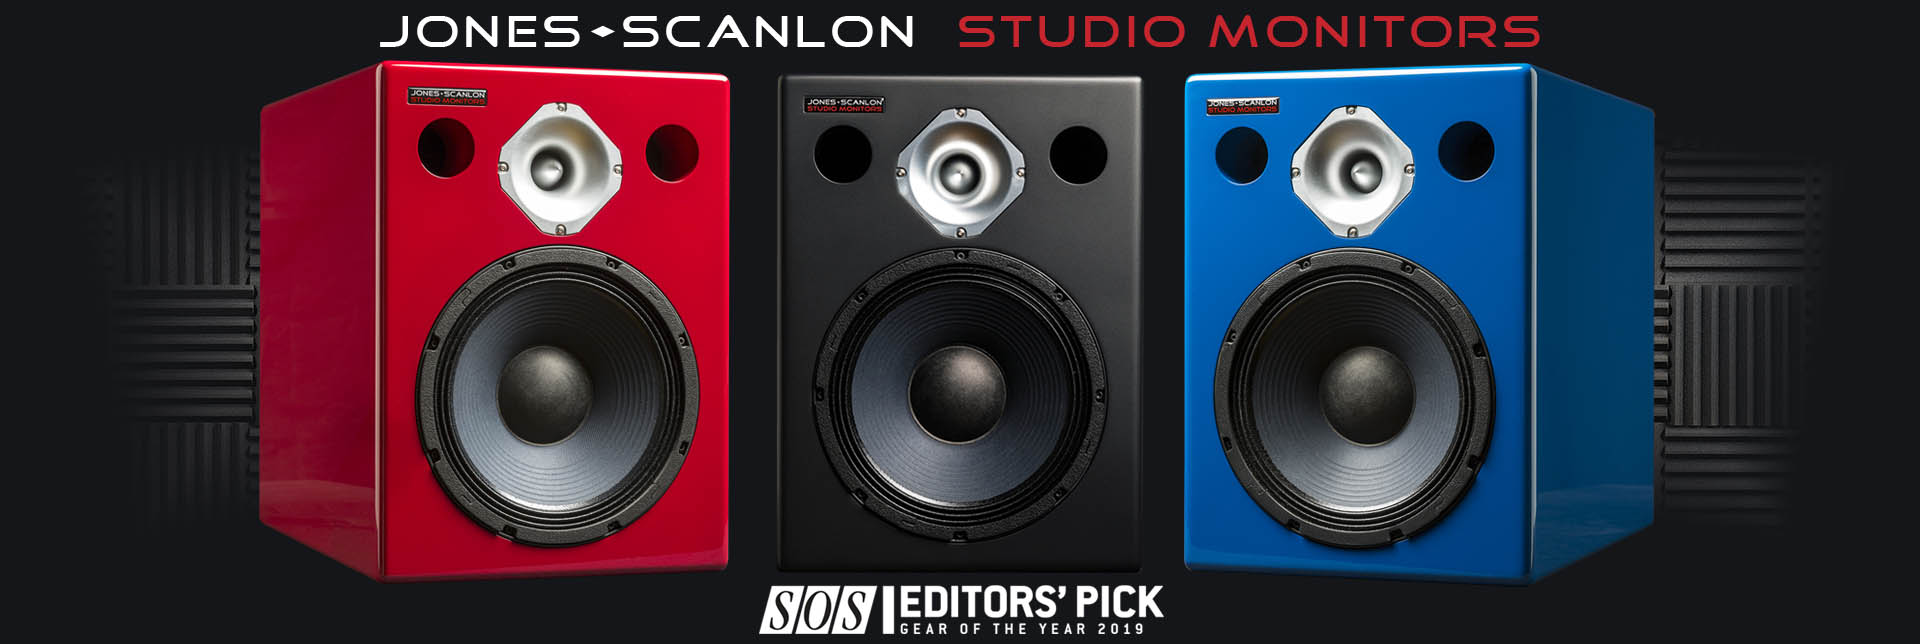 Jones-Scanlon Studio Monitors - recording engineering, audio and film post production, sound track mastering, audio mixing, sound mixing, recording studio gear.